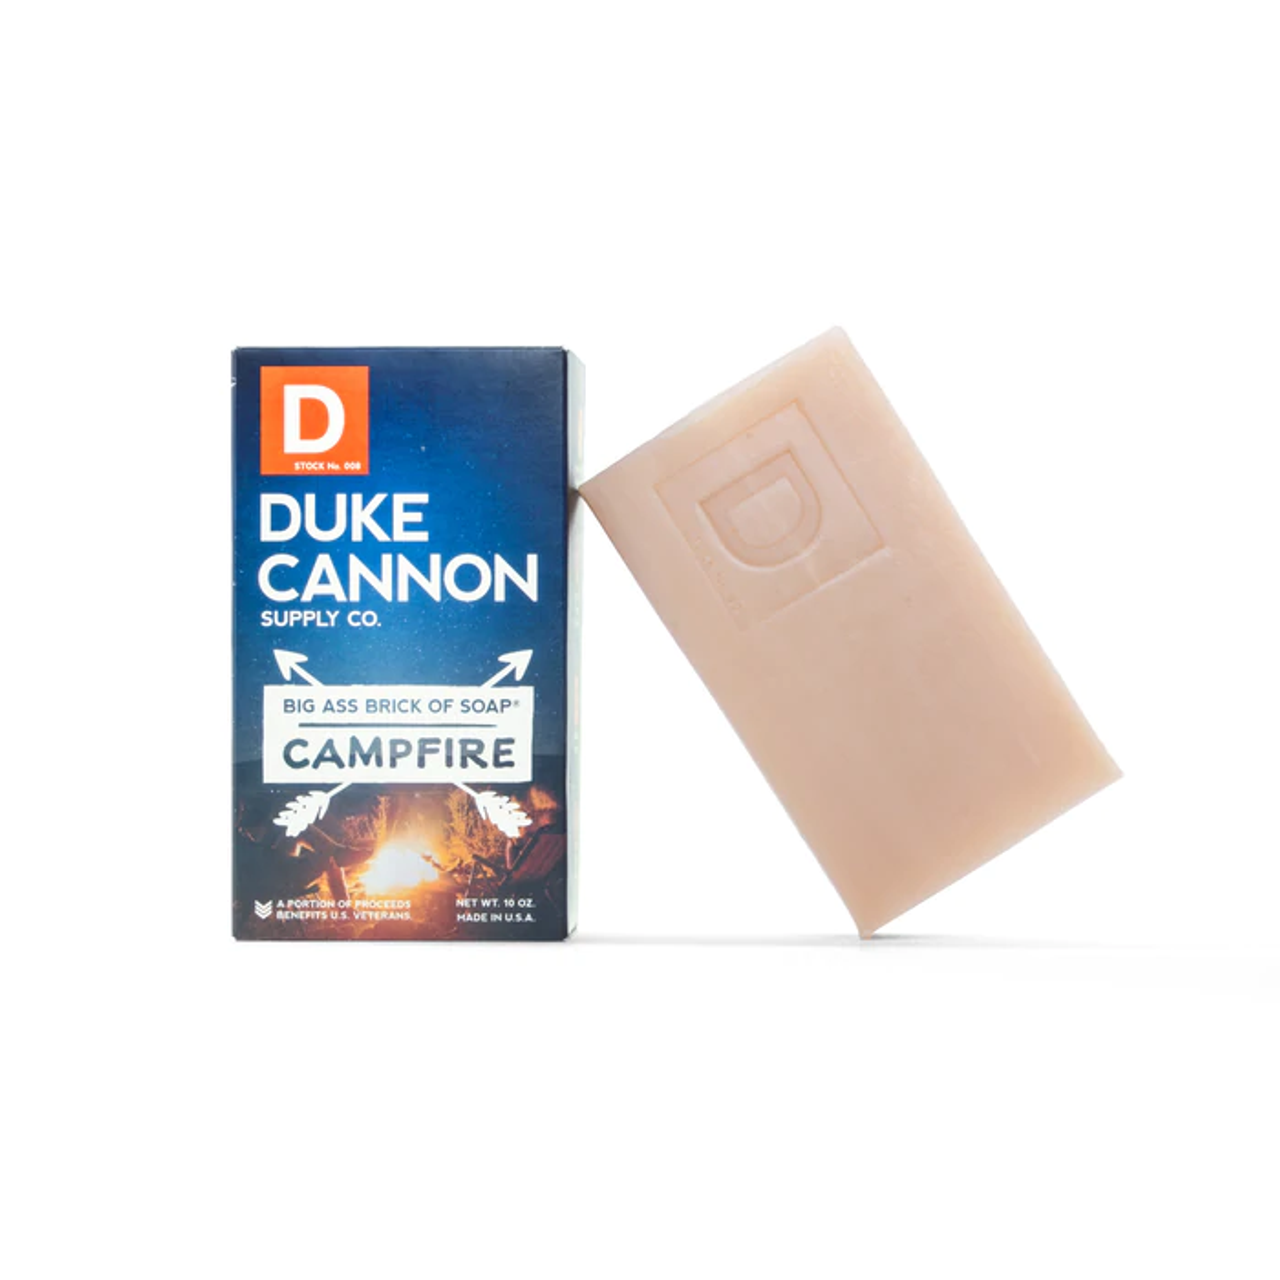 Duke Cannon Supply Co. Soap, Bay Rum - 10 oz